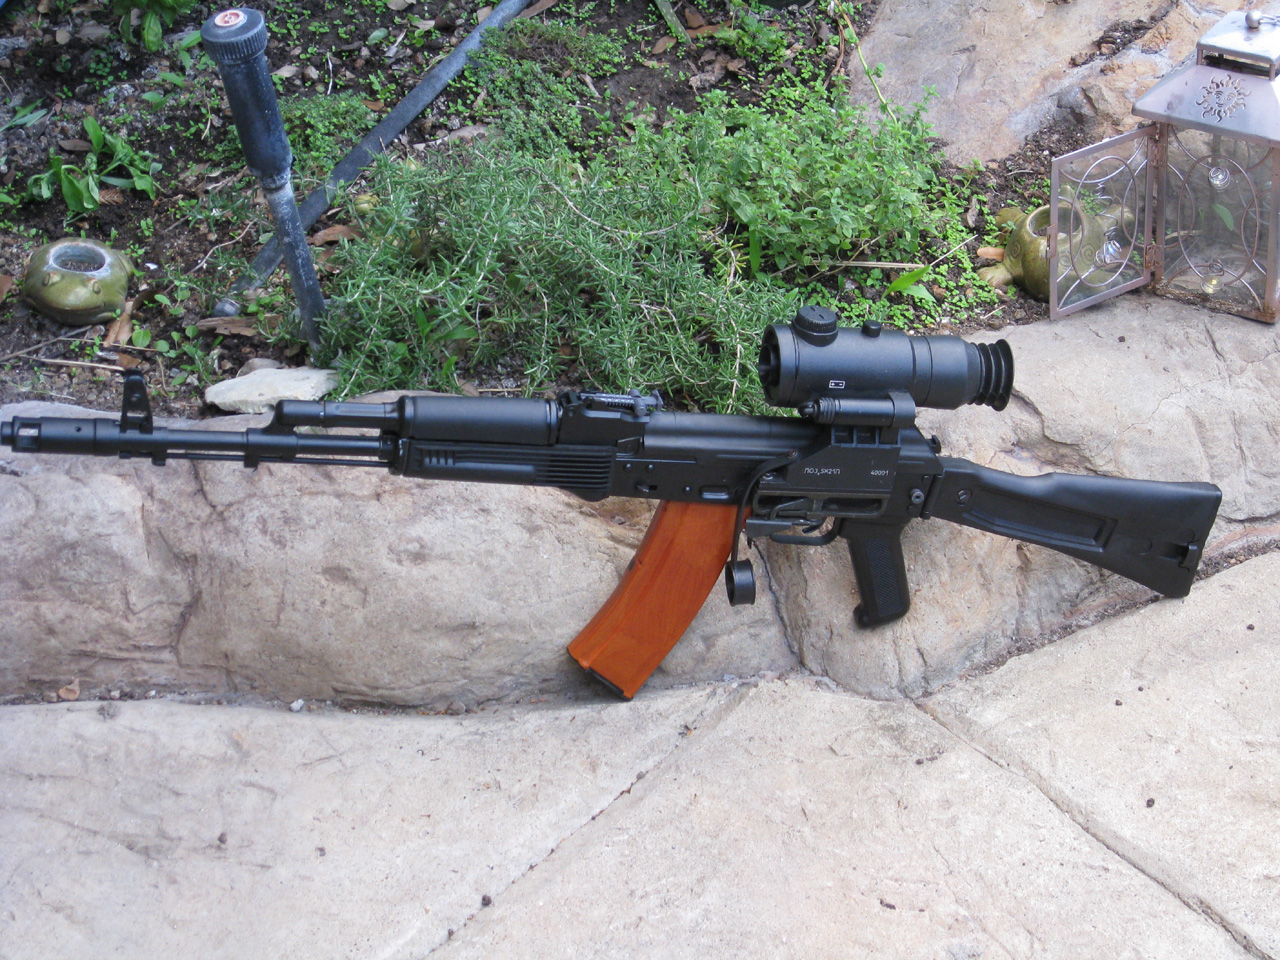 Belomo POSP 4x24 Rifle Scope, 400m Rangefinder, SVD, *Good*